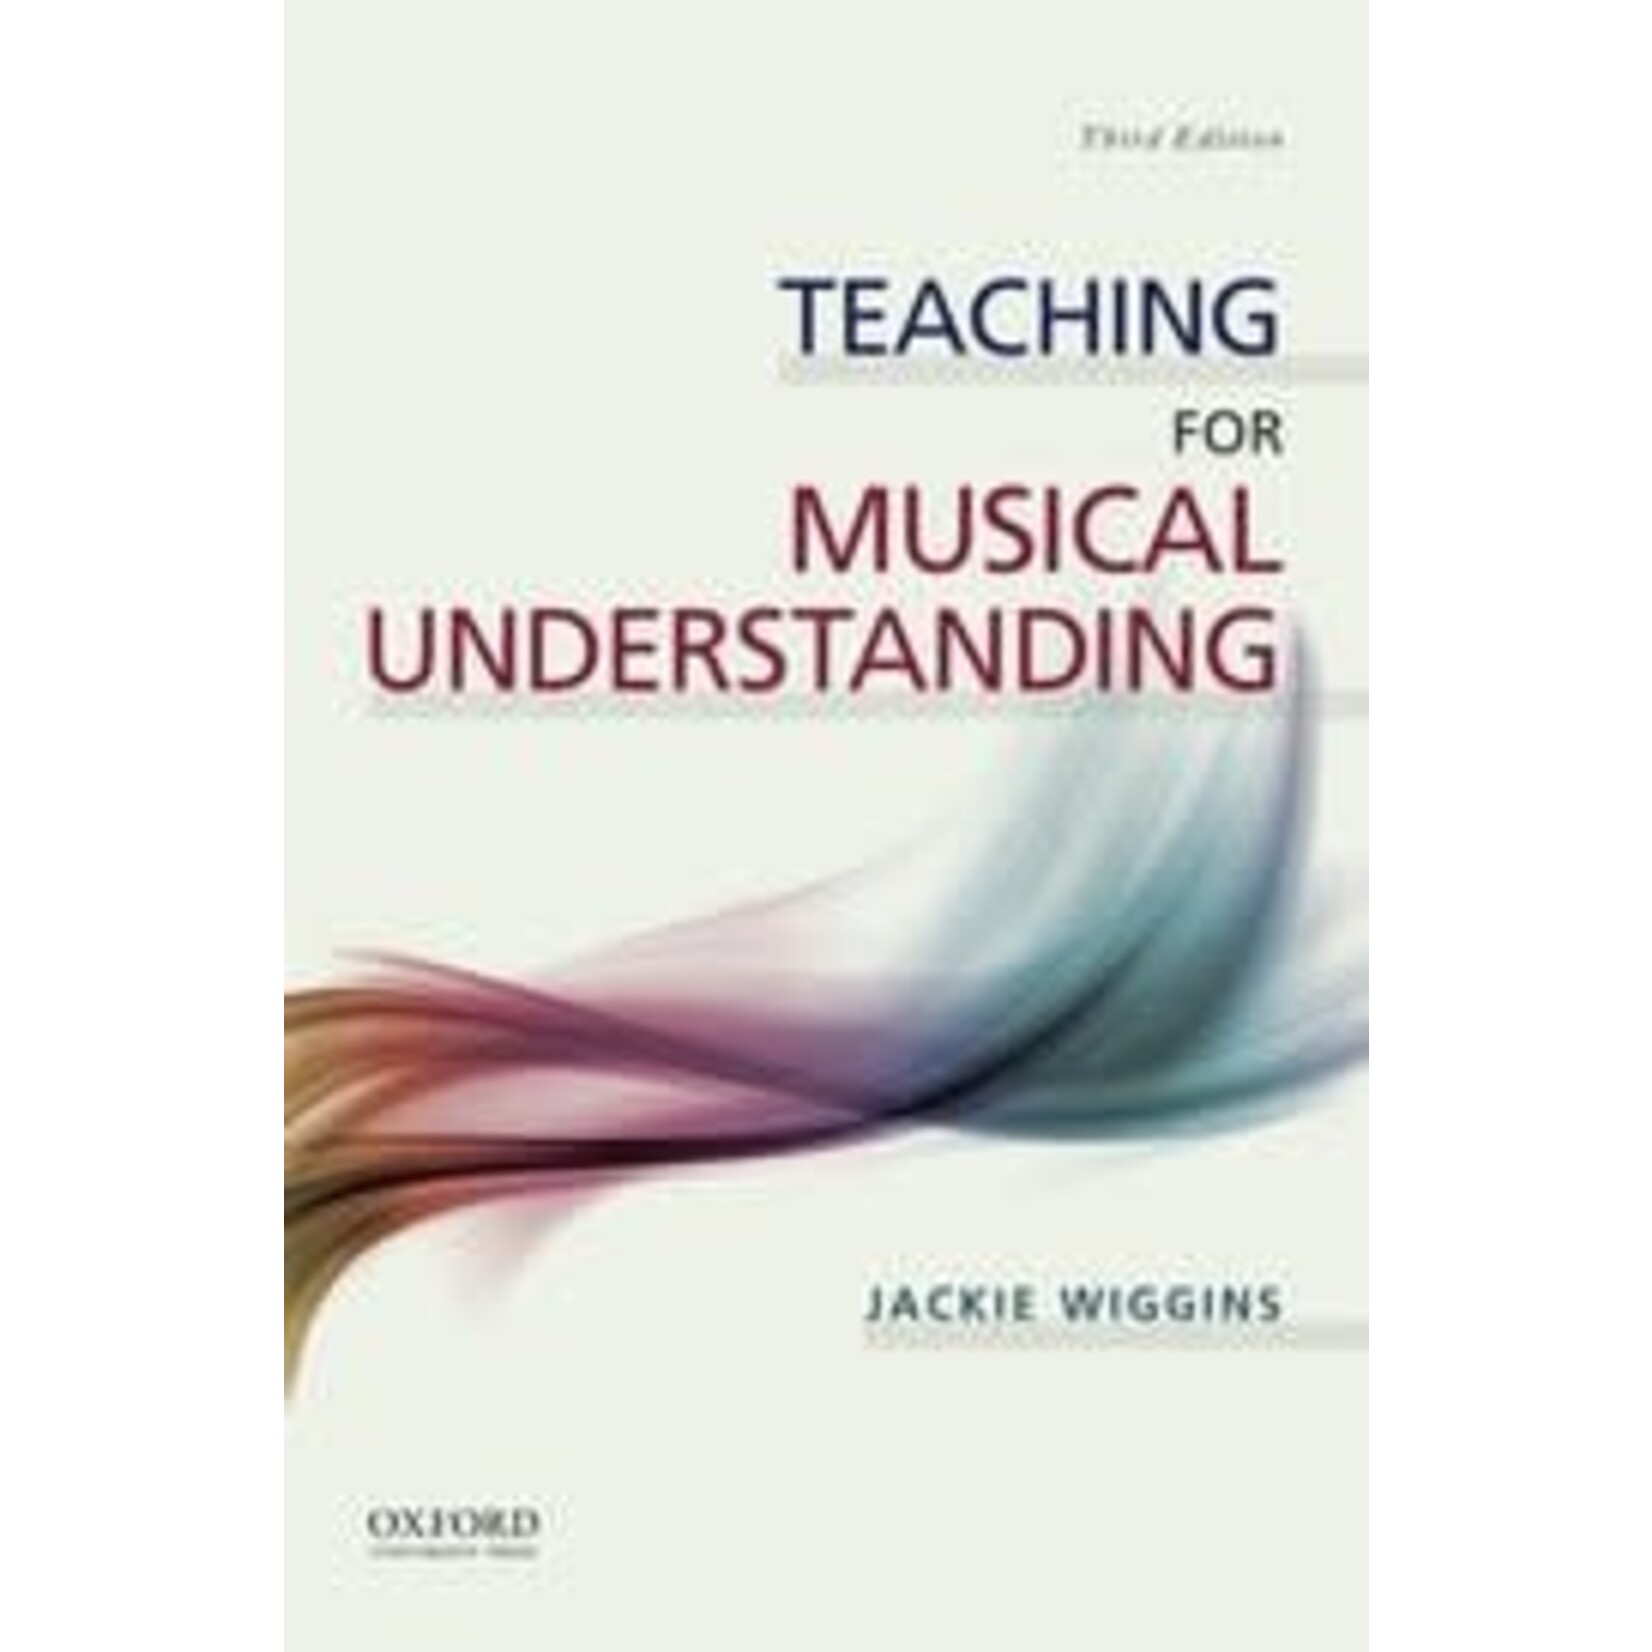 Teaching for Musical Understanding